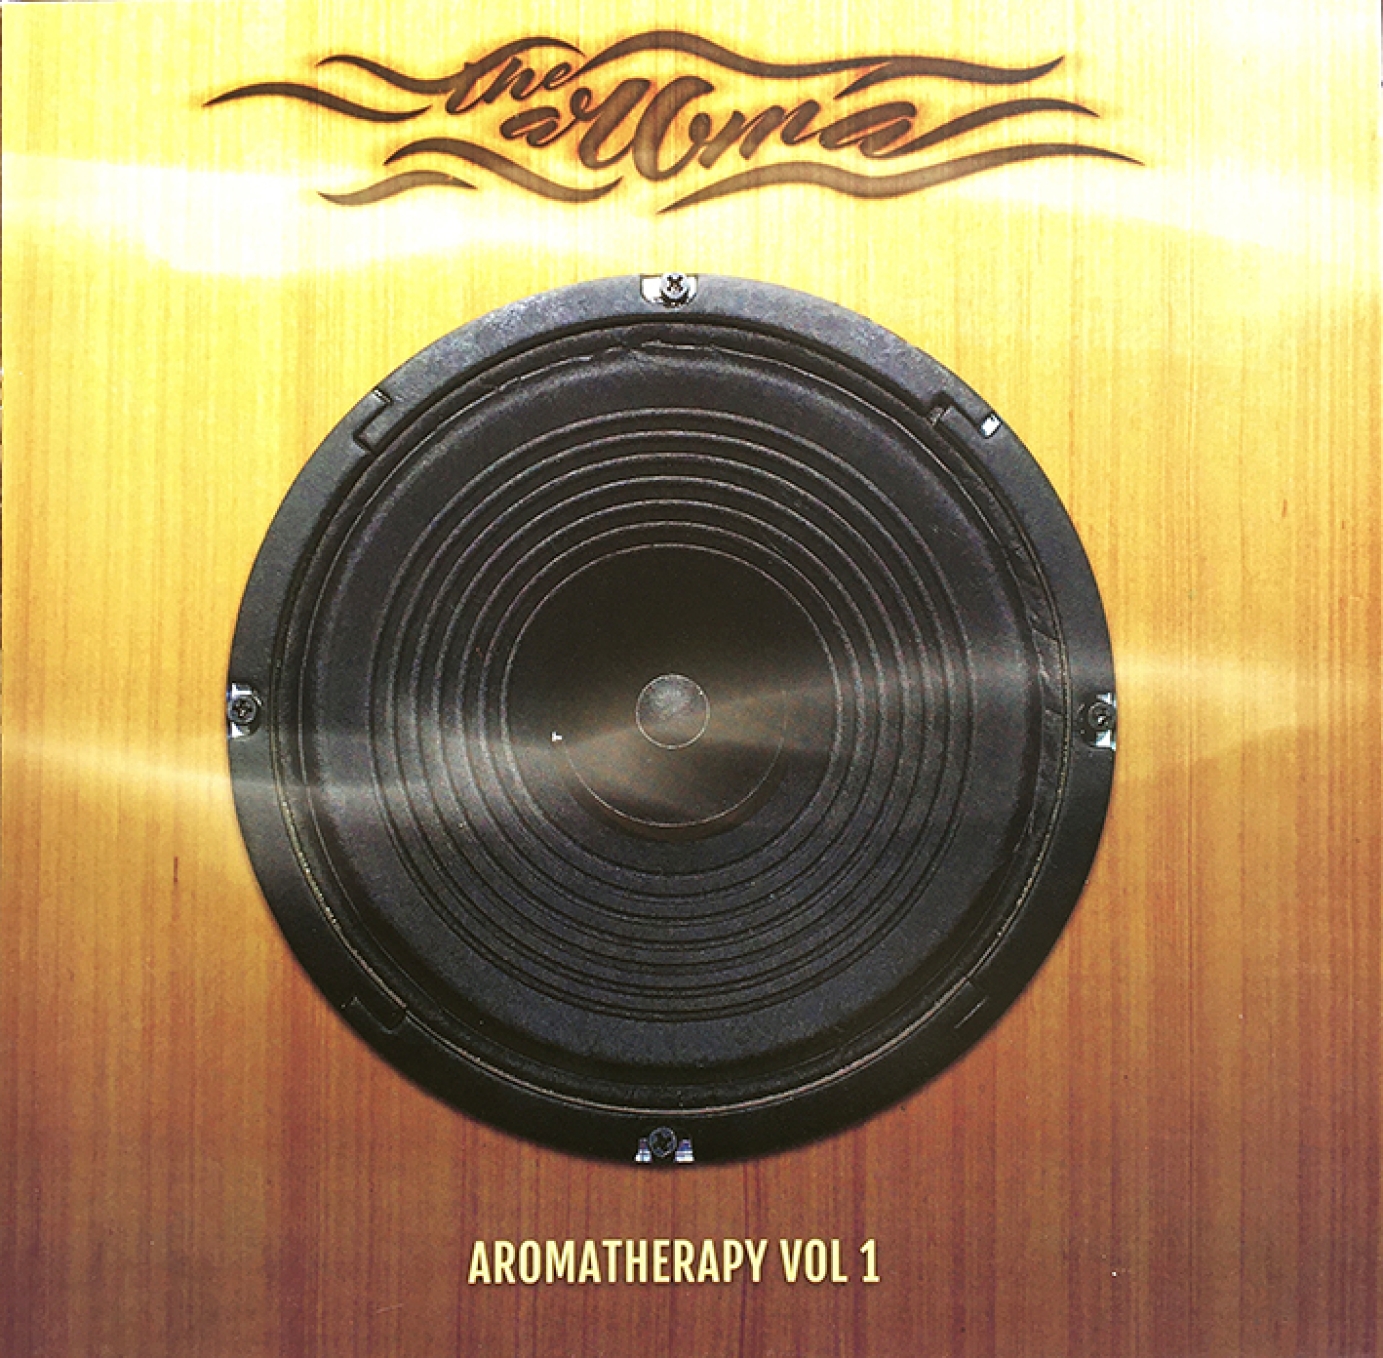 The Aroma album artwork and logo identity